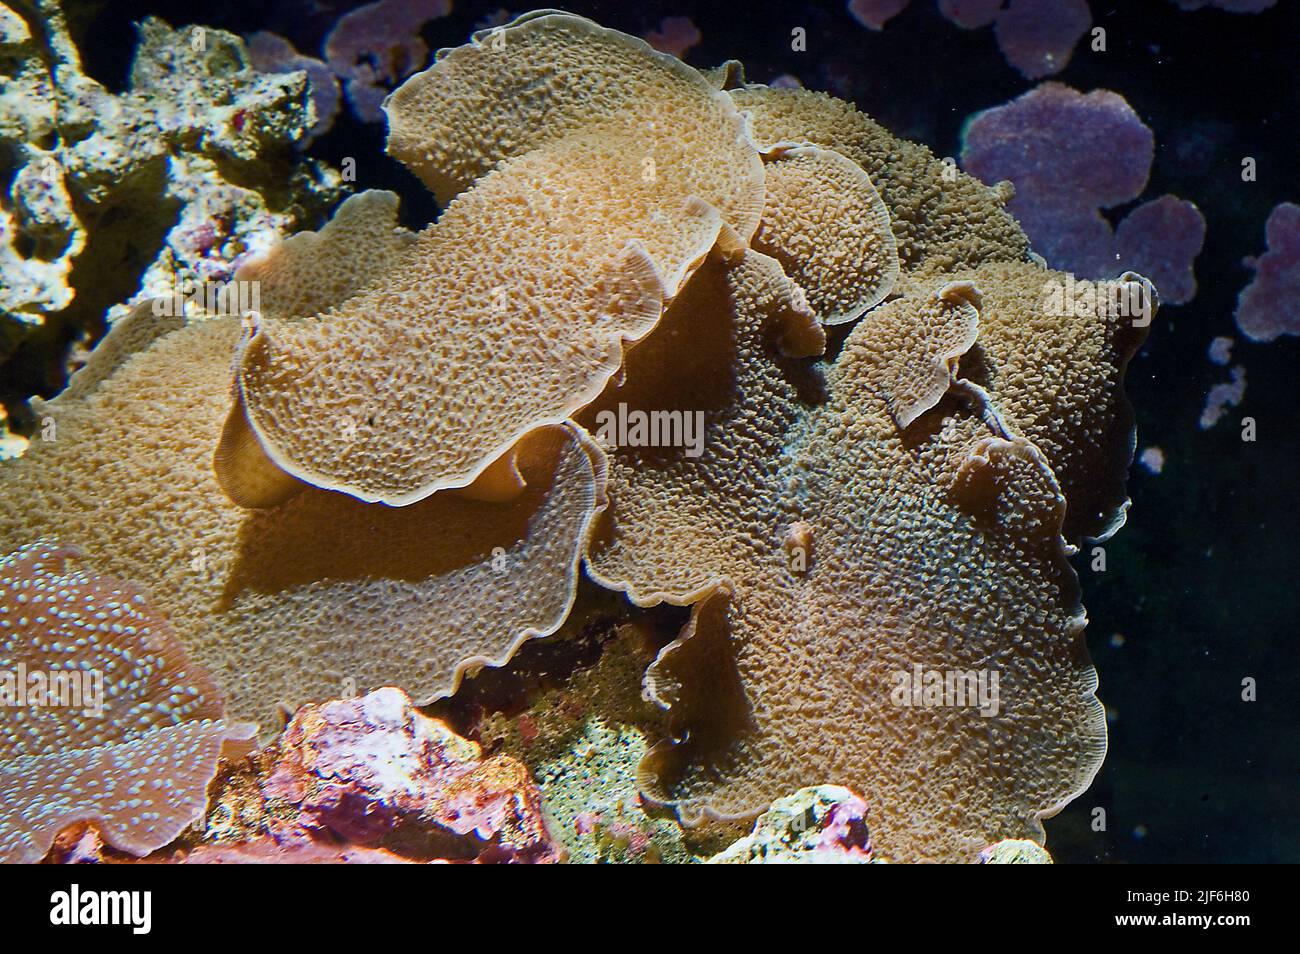 Colony of Hairy Mushroom Anemone or Indonesian Elephant Ear, Rhodactis cf. indosinensis. Stock Photo